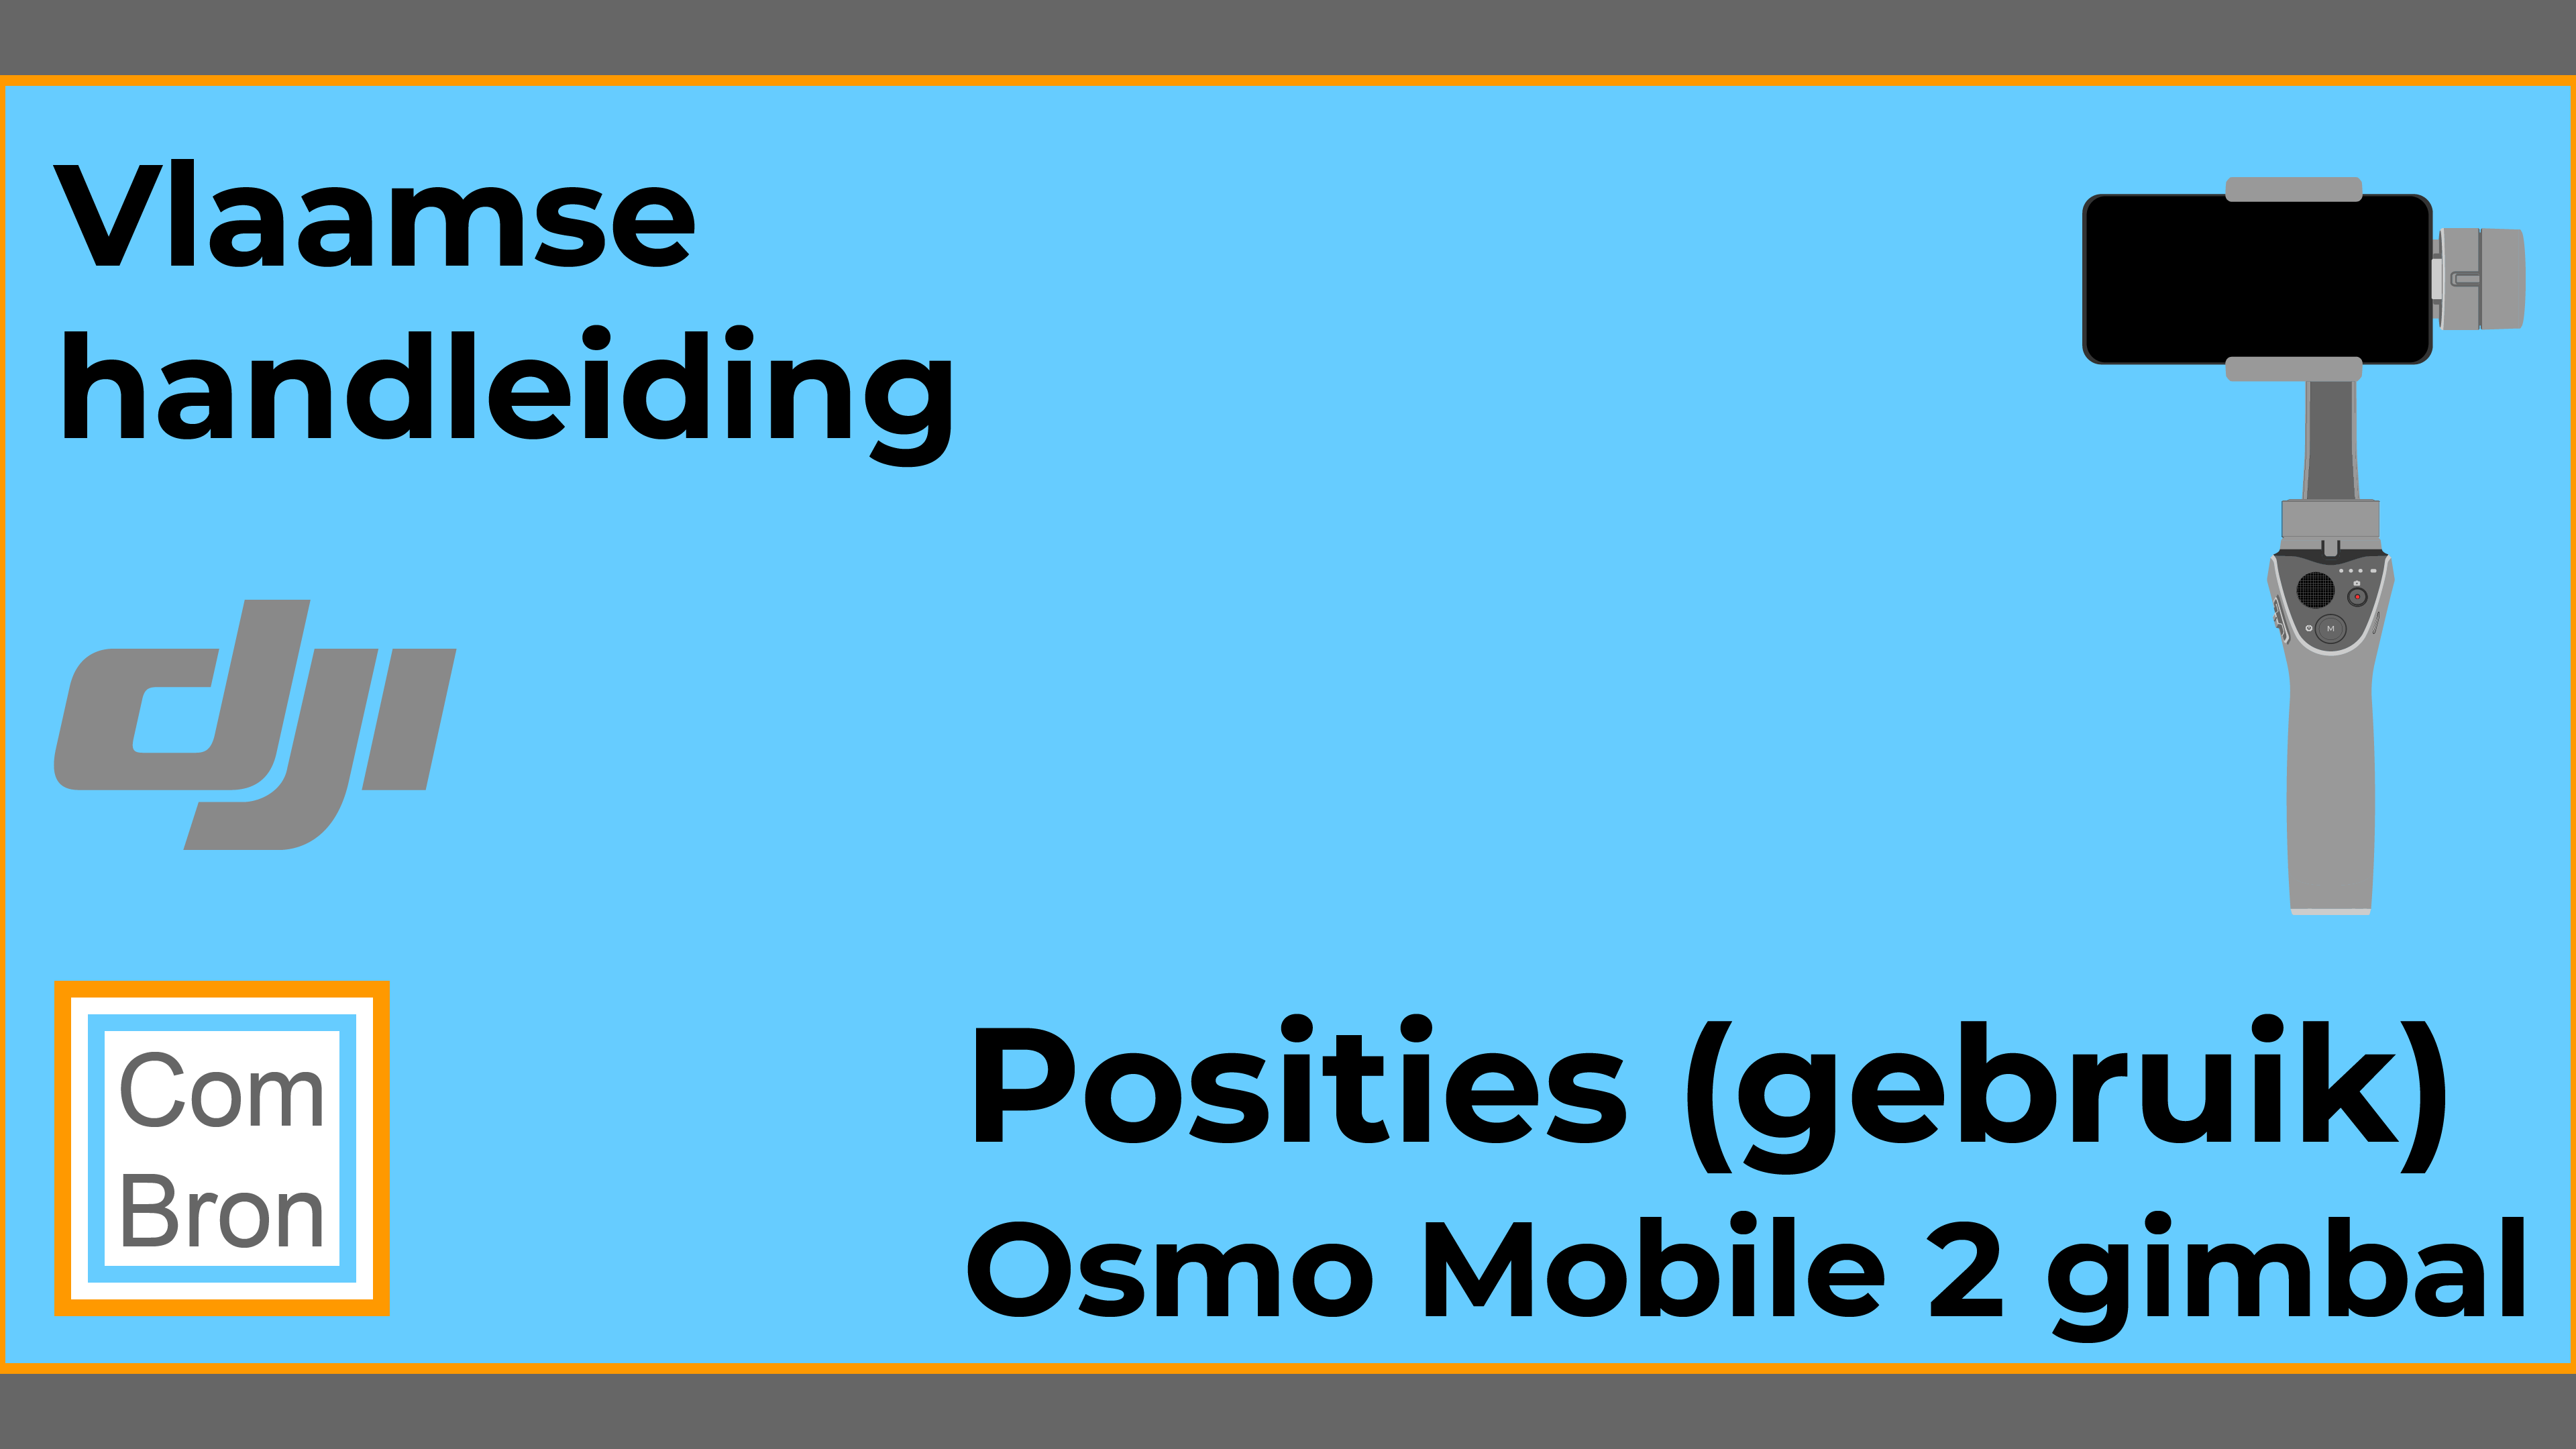 Posities (gebruiksposities) DJI Osmo Mobile 2 gimbal.